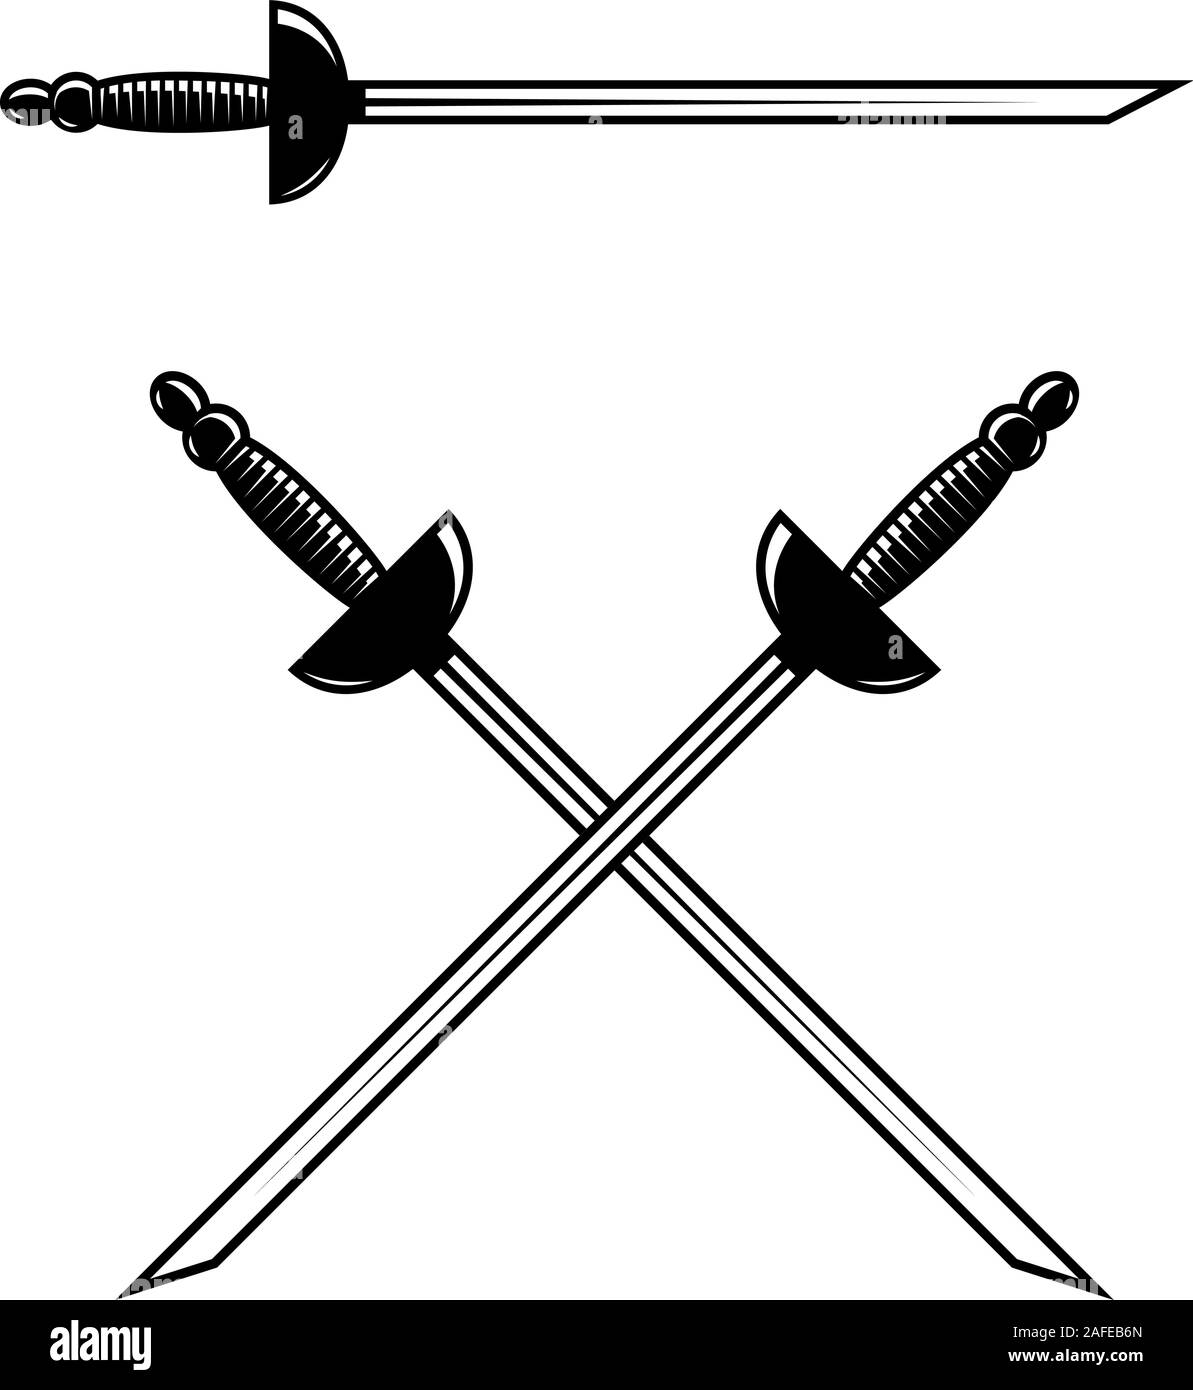 Crossed swords isolated on white background. Design element for logo, label, badge, sign. Vector illustration Stock Vector